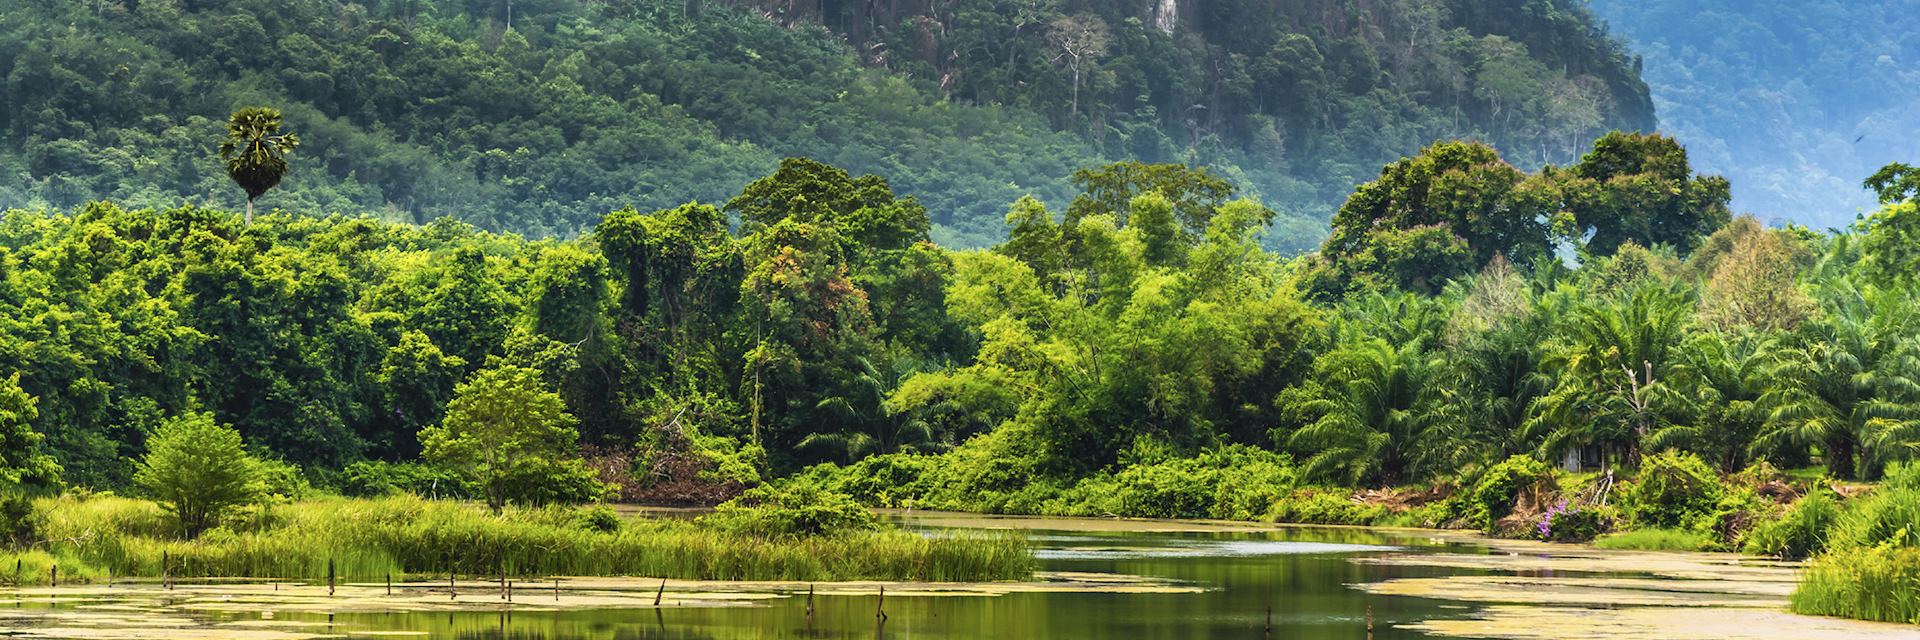 The tropical rainforest of Khao Yai National Park